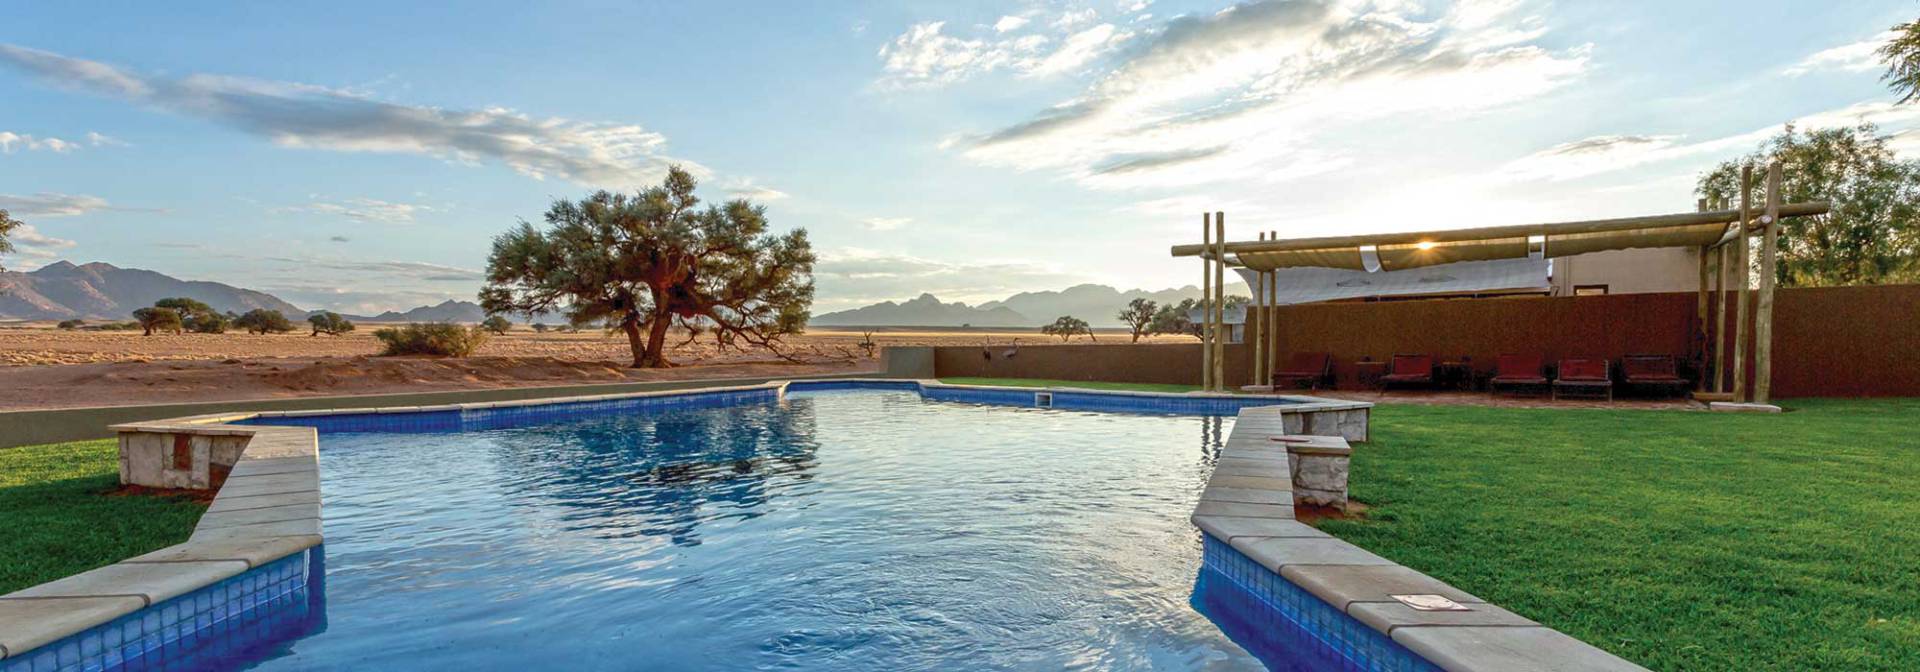 Lodge mit Swimmingpool in der Namib